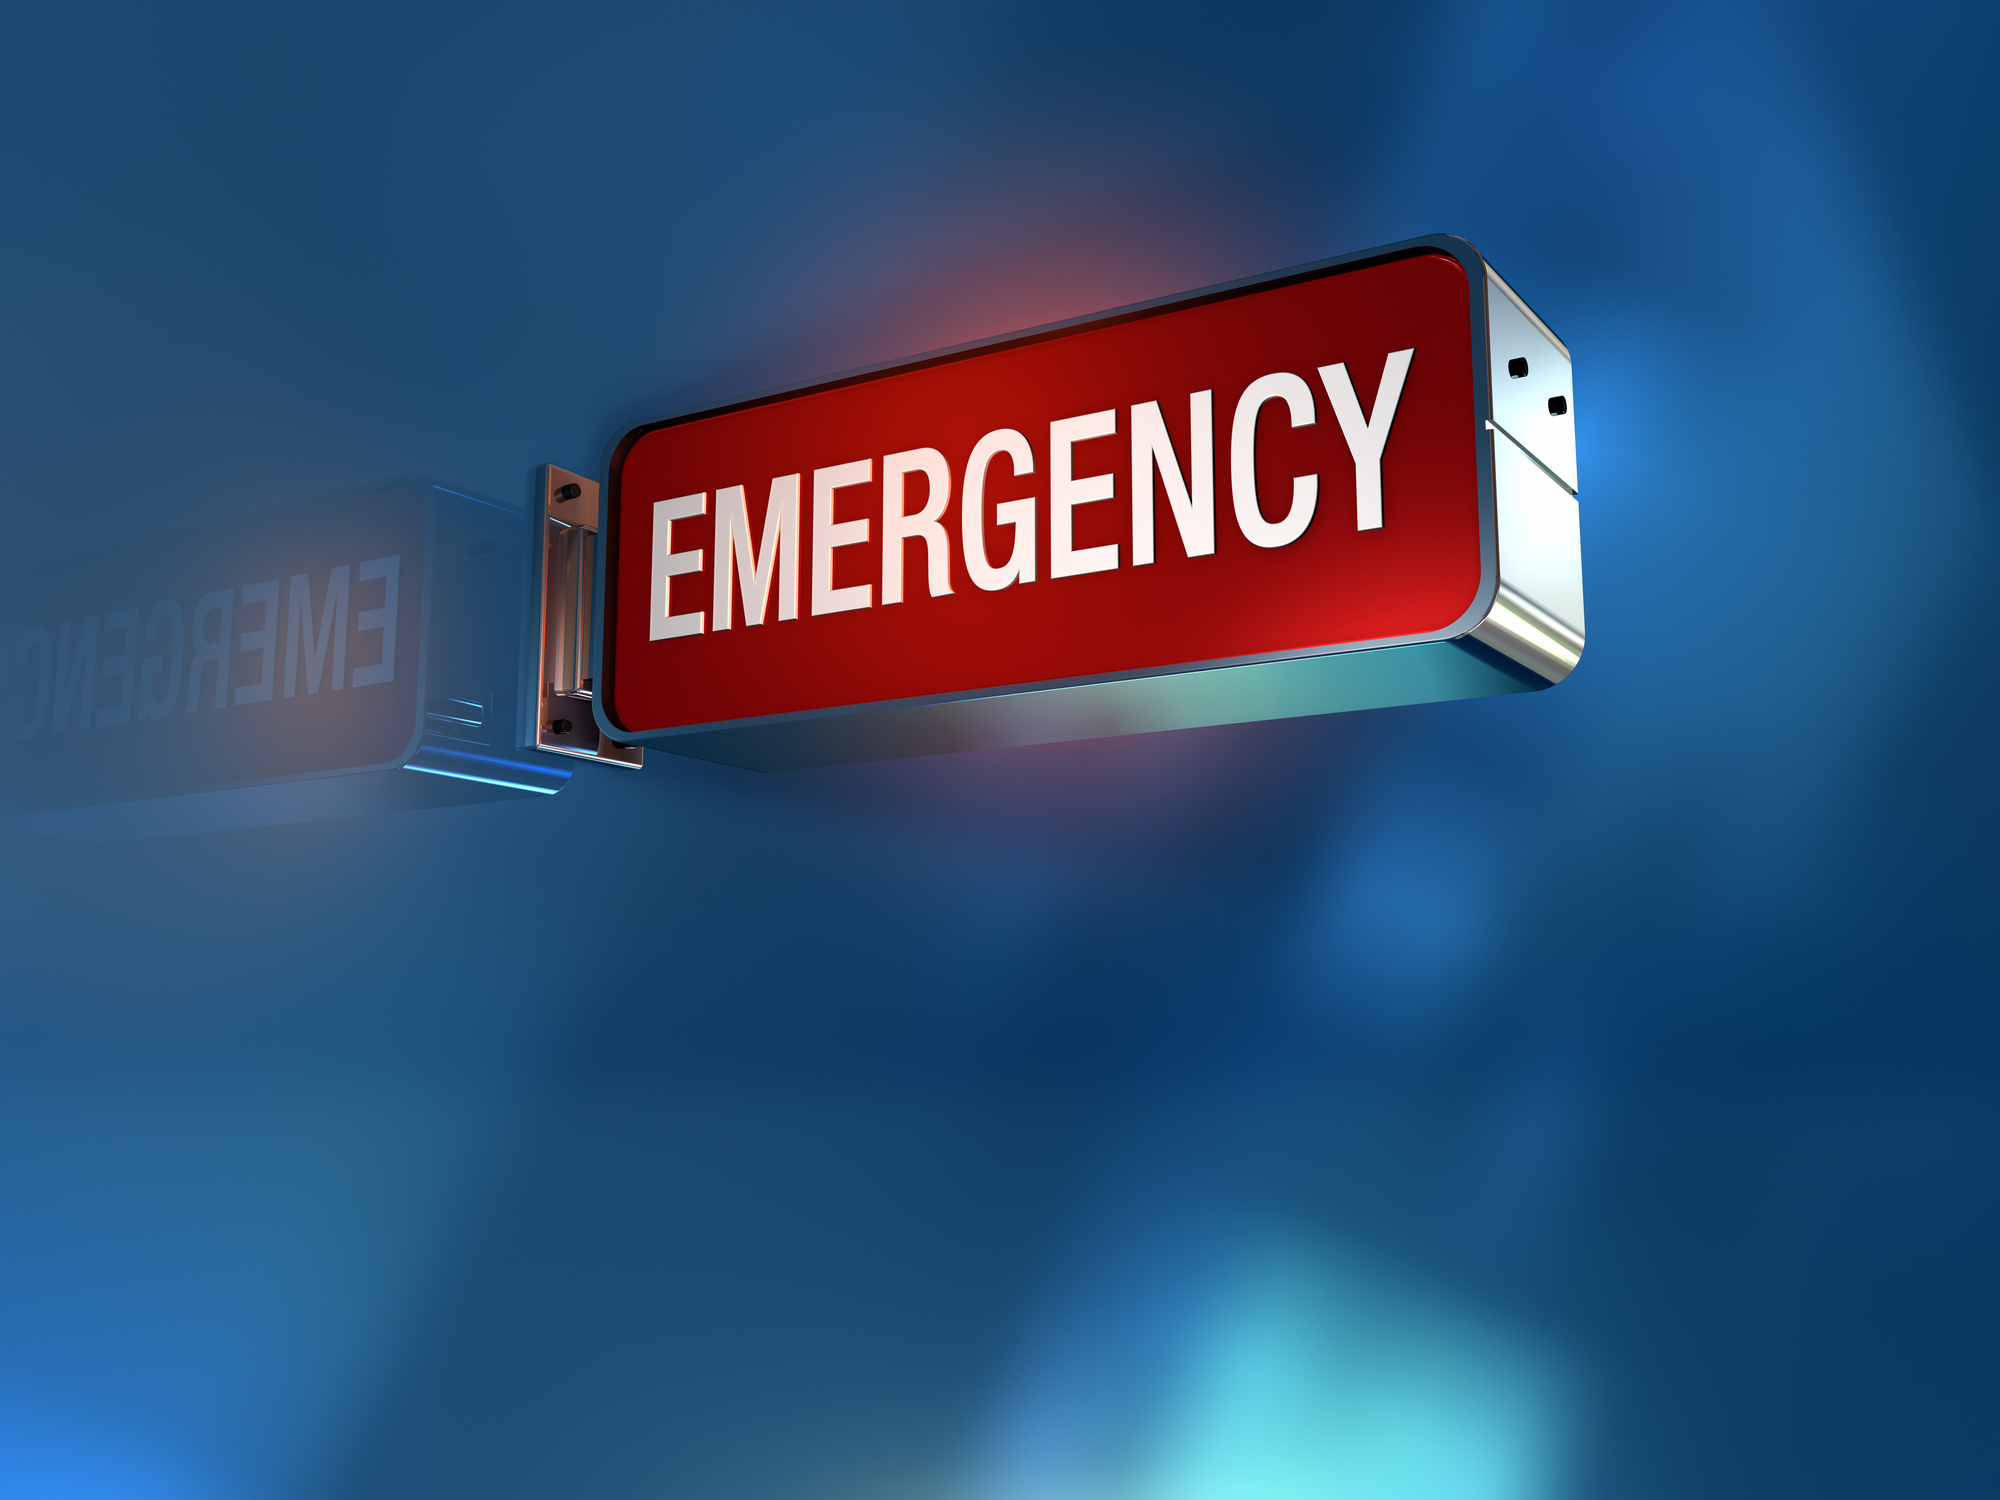 Emergency sign